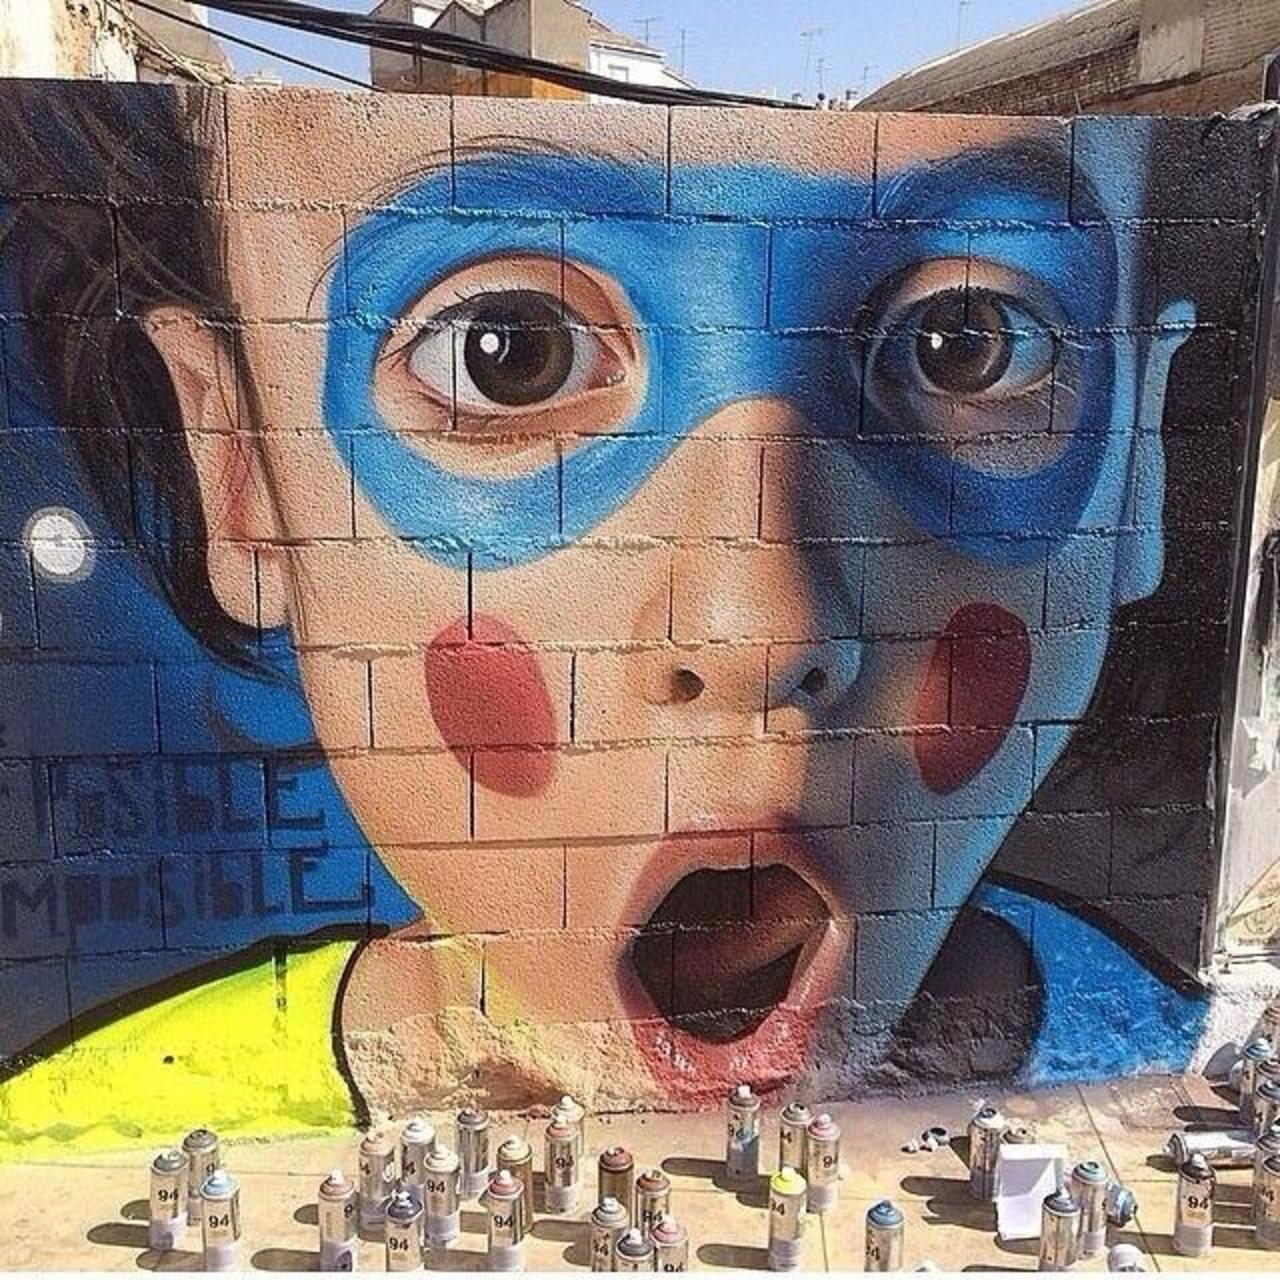 RT @designopinion: Artist @Belinwan unique Street Art portrait piece located in Linares, Spain #art #mural #graffiti #streetart https://t.co/6epDZ6qXwM